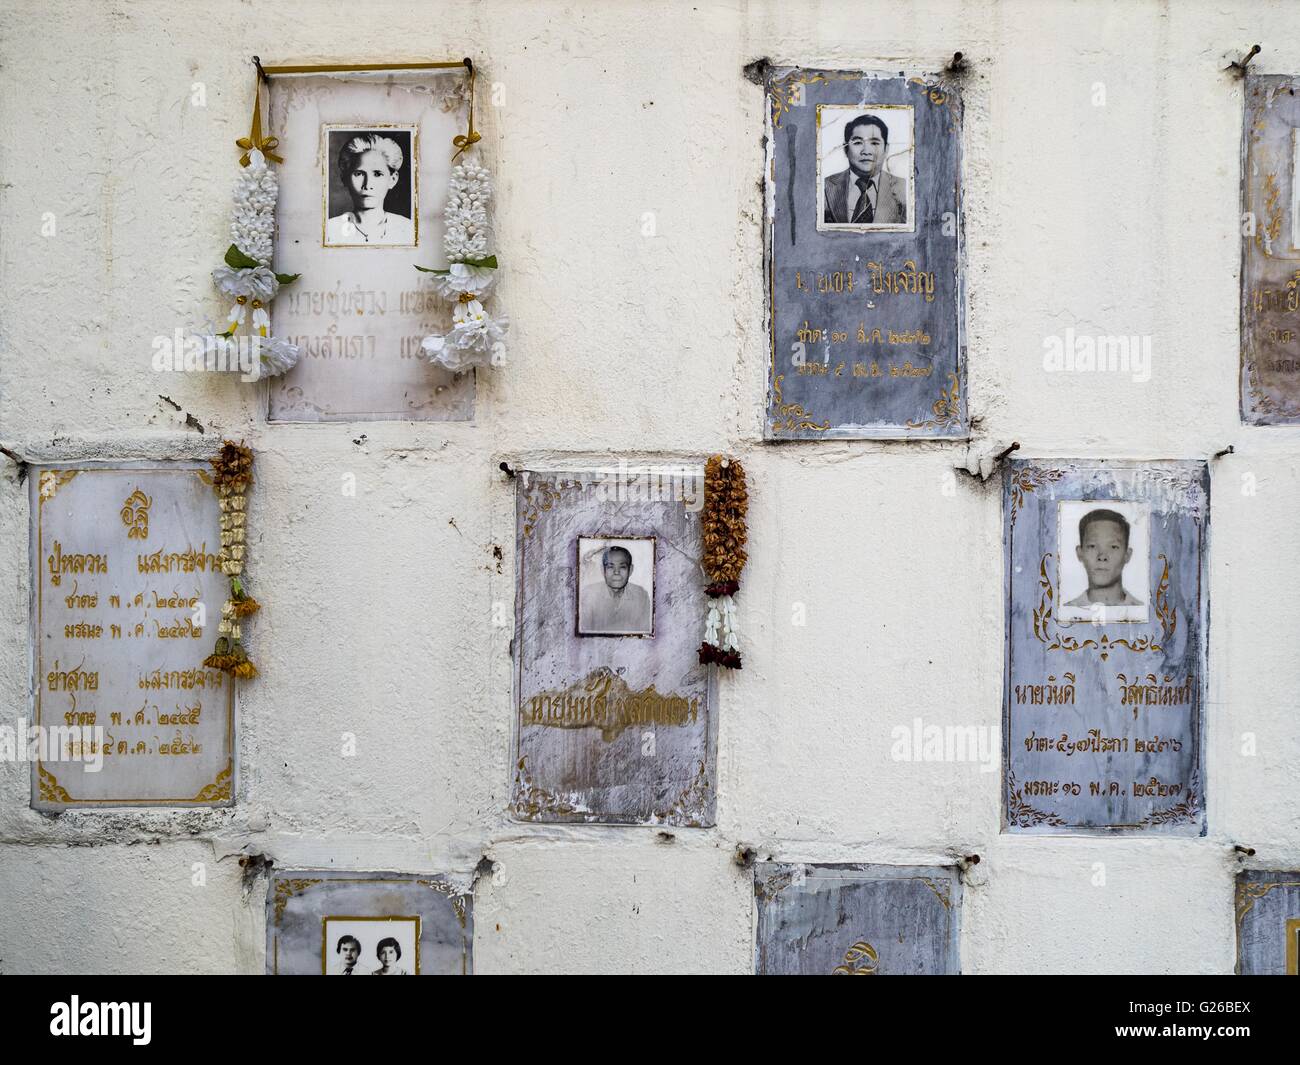 May 25, 2016 - Bangkok, Bangkok, Thailand - People's ashes are interred in the wall that surrounds Wat Sriboonreung in the Ramkhamhaeng area of Bangkok. (Credit Image: © Jack Kurtz via ZUMA Wire) Stock Photo